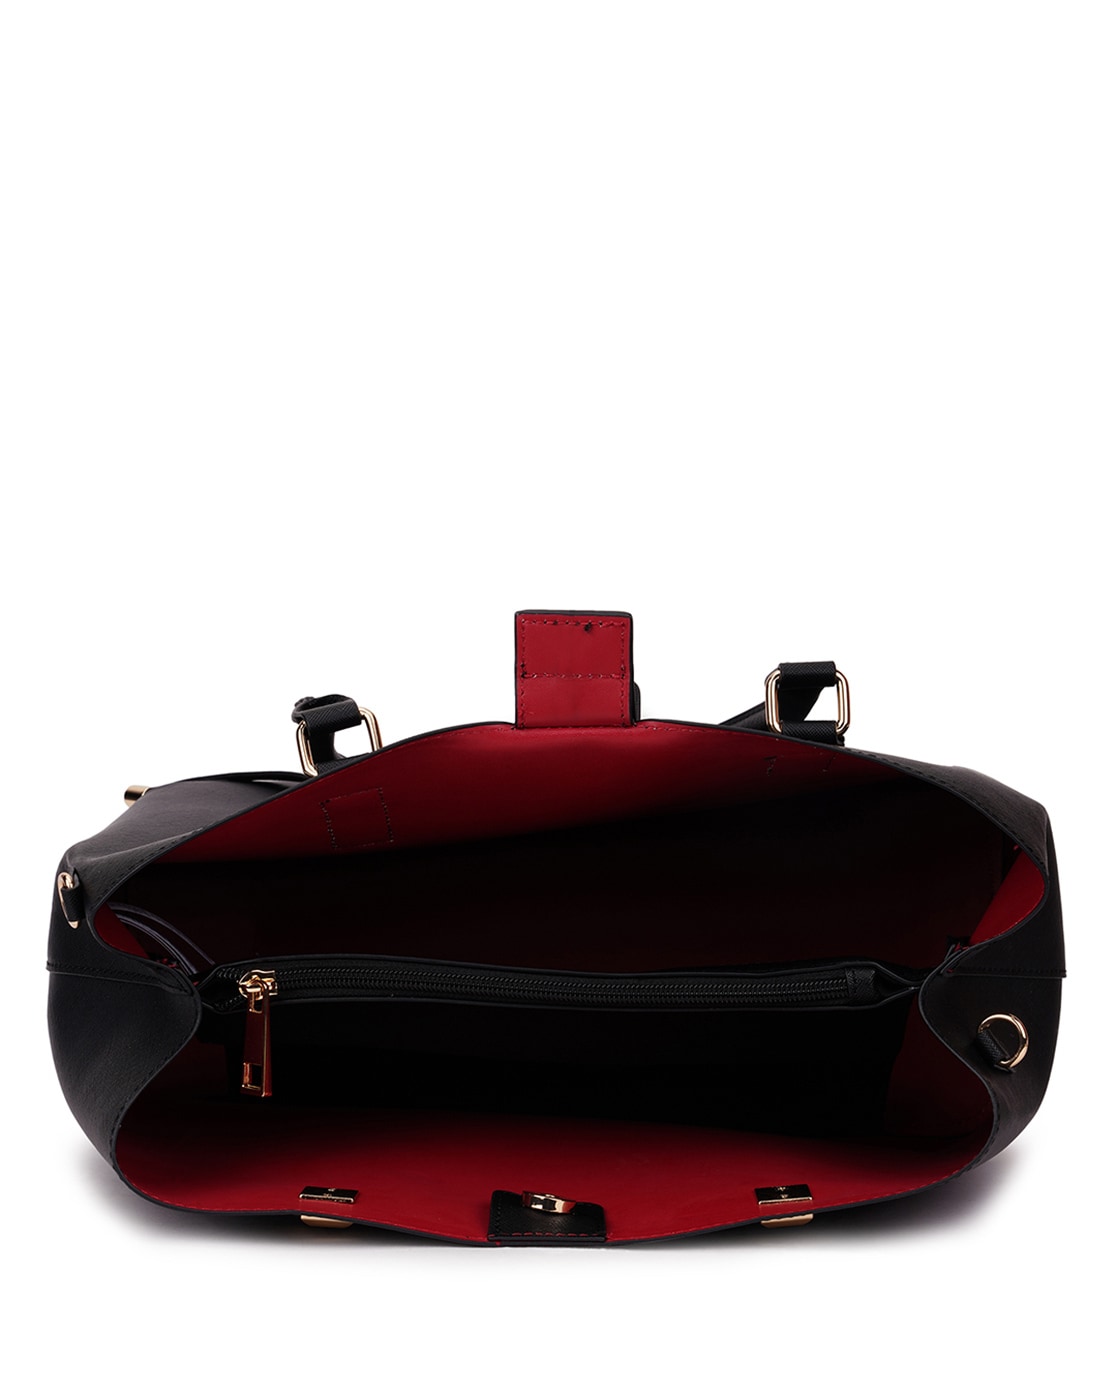 ALDO Convertible Handbags | Mercari